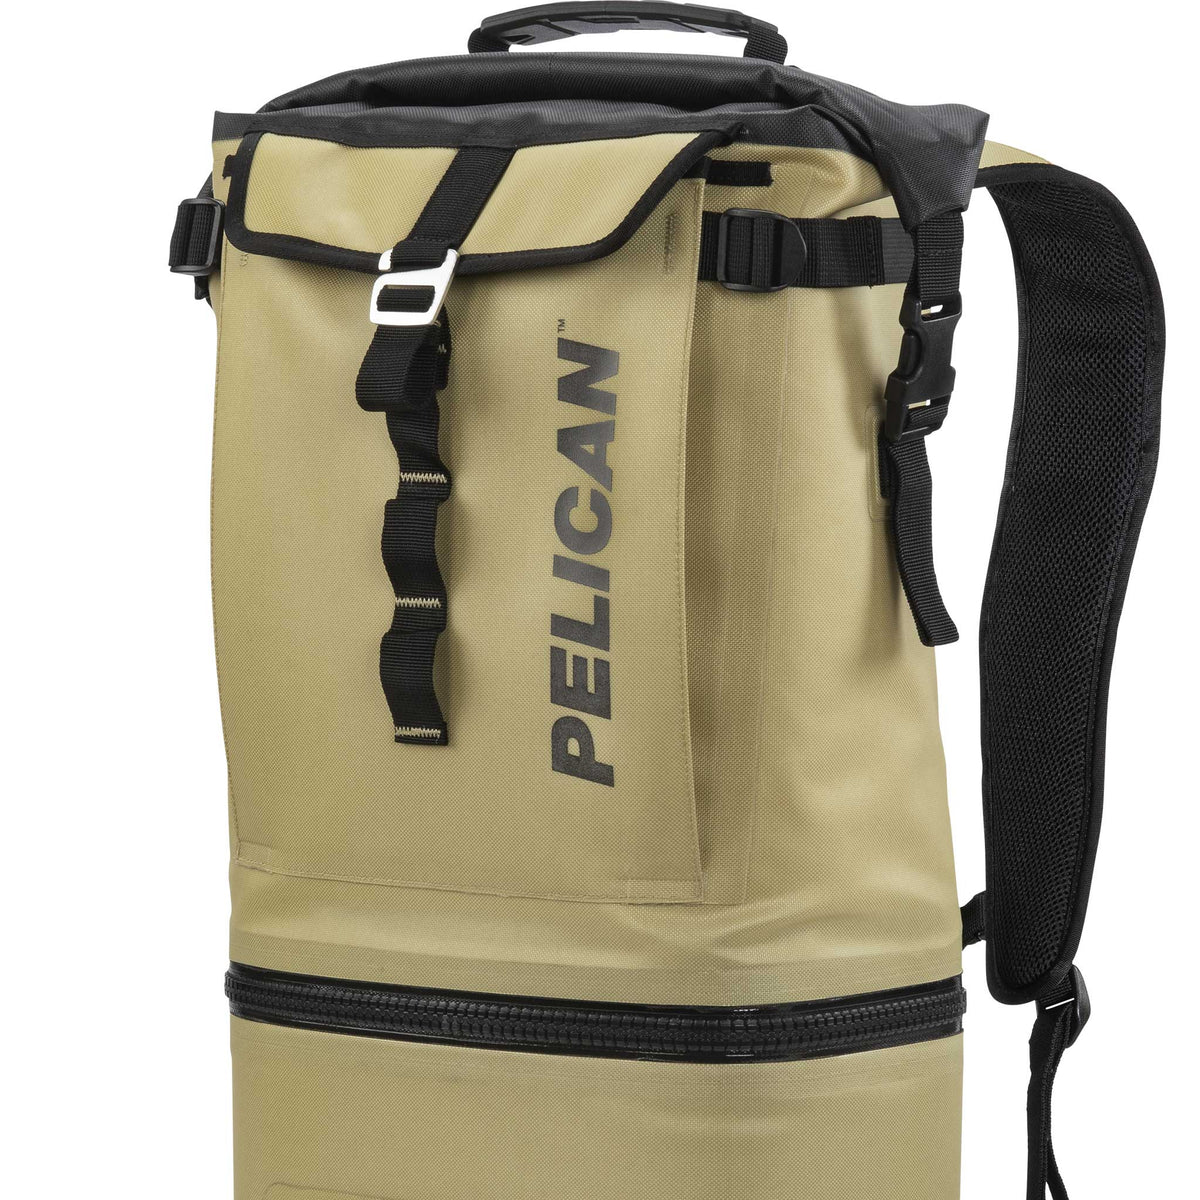 Pelican™ Dayventure Backpack Soft Cooler in tan